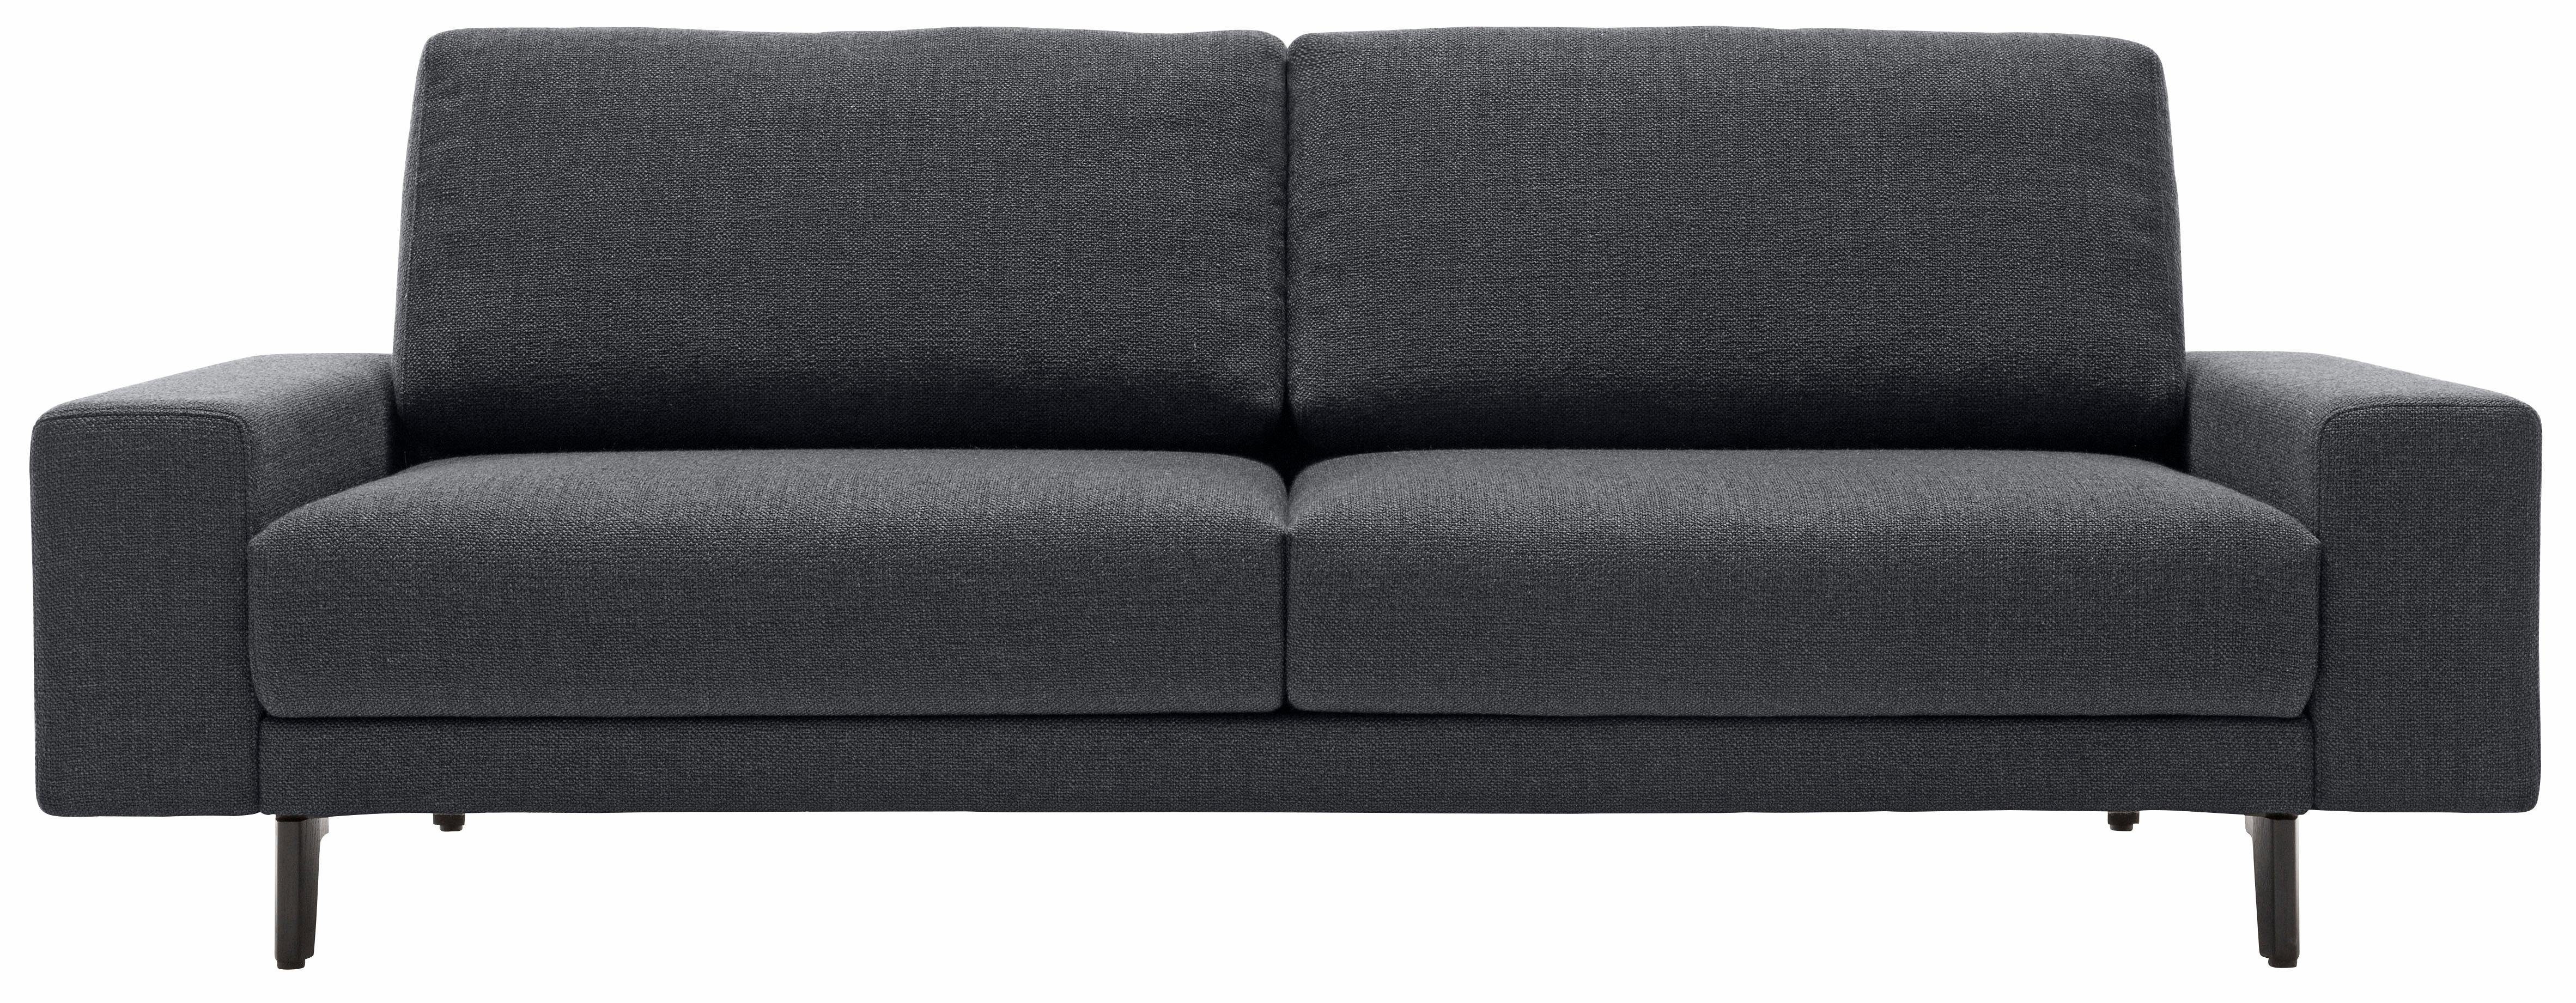 hülsta sofa 2-Sitzer hs.450, Armlehne Breite in niedrig, Alugussfüße umbragrau, cm 180 breit